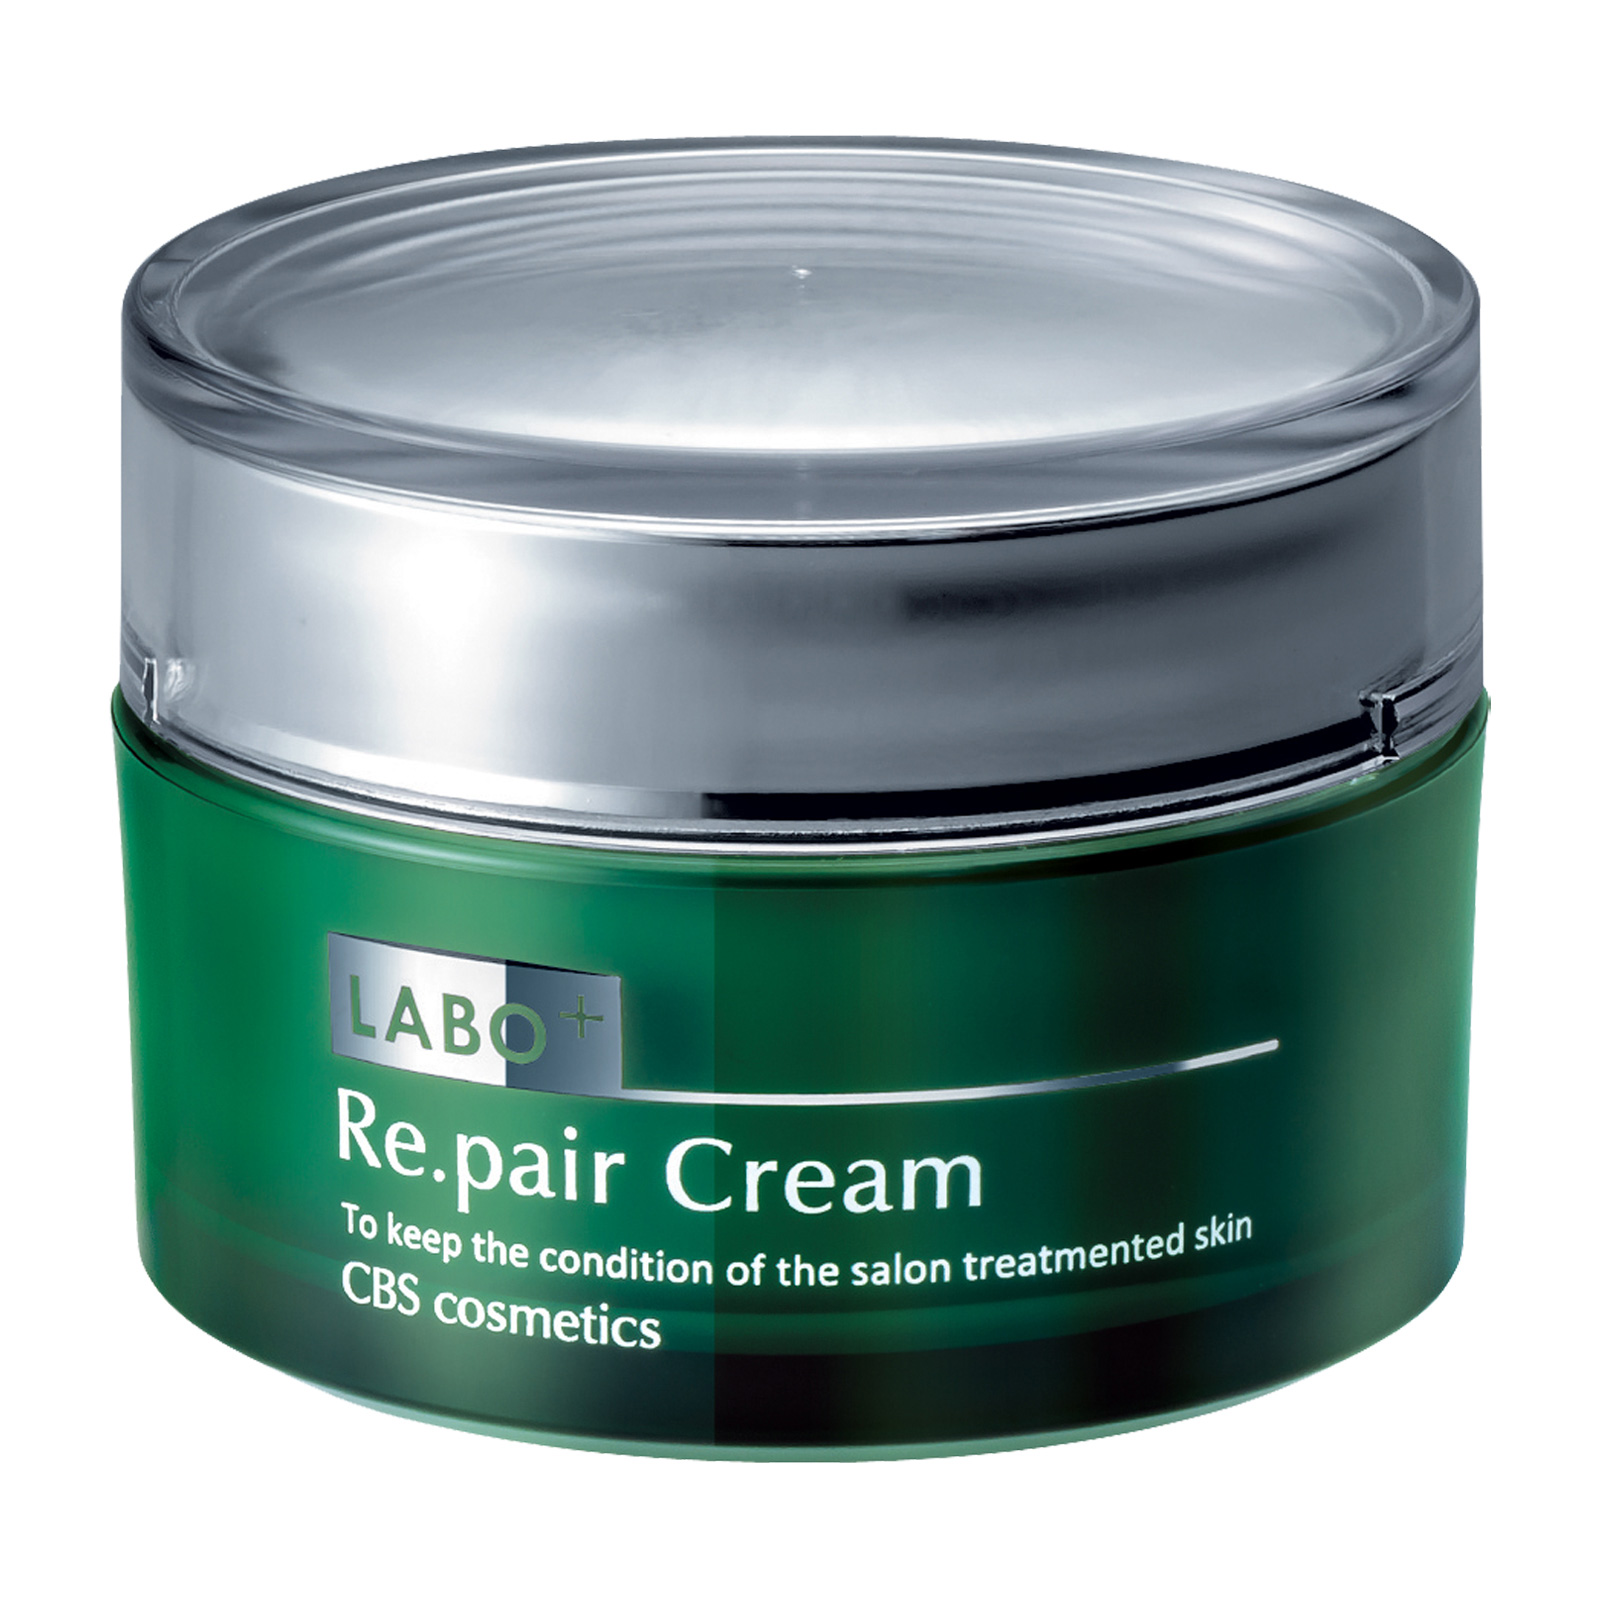 CBS Cosmetics LABO+ Re.pair Cream. Антивозрастной восстанавливающий крем для лица Лабо+, 45 г